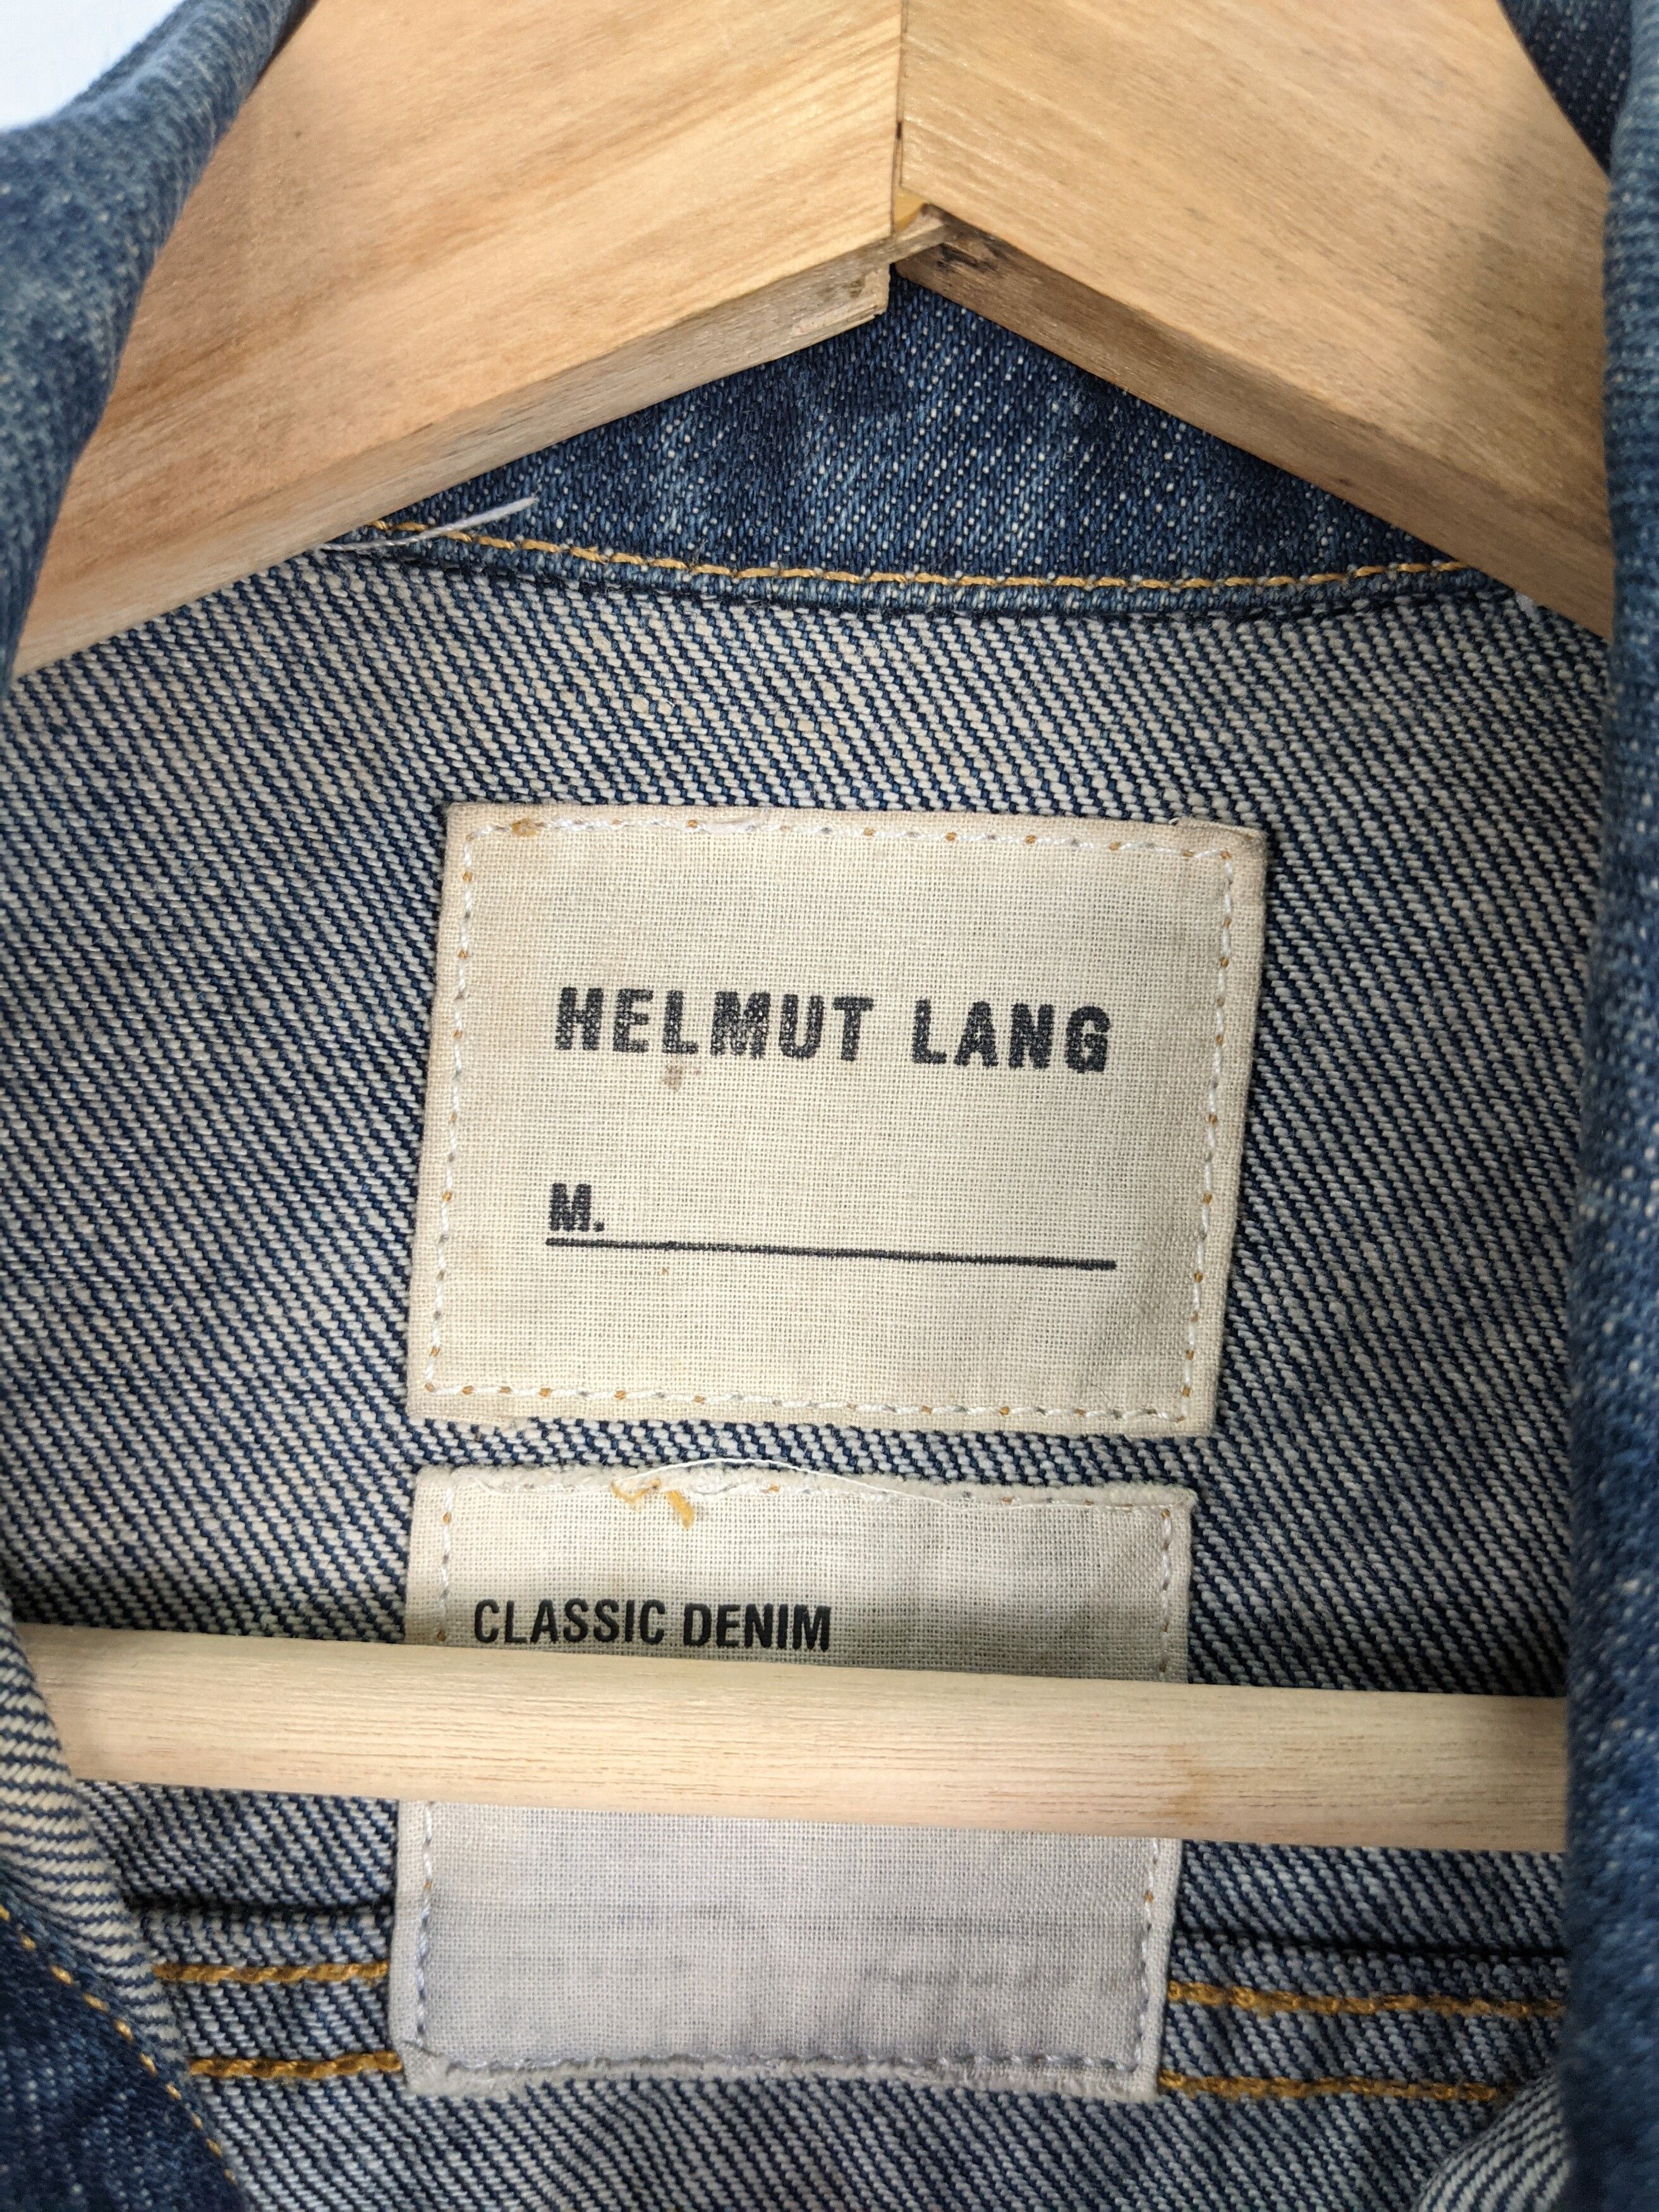 Helmut Lang Classic Denim Jeans Trucker Jacket - 3